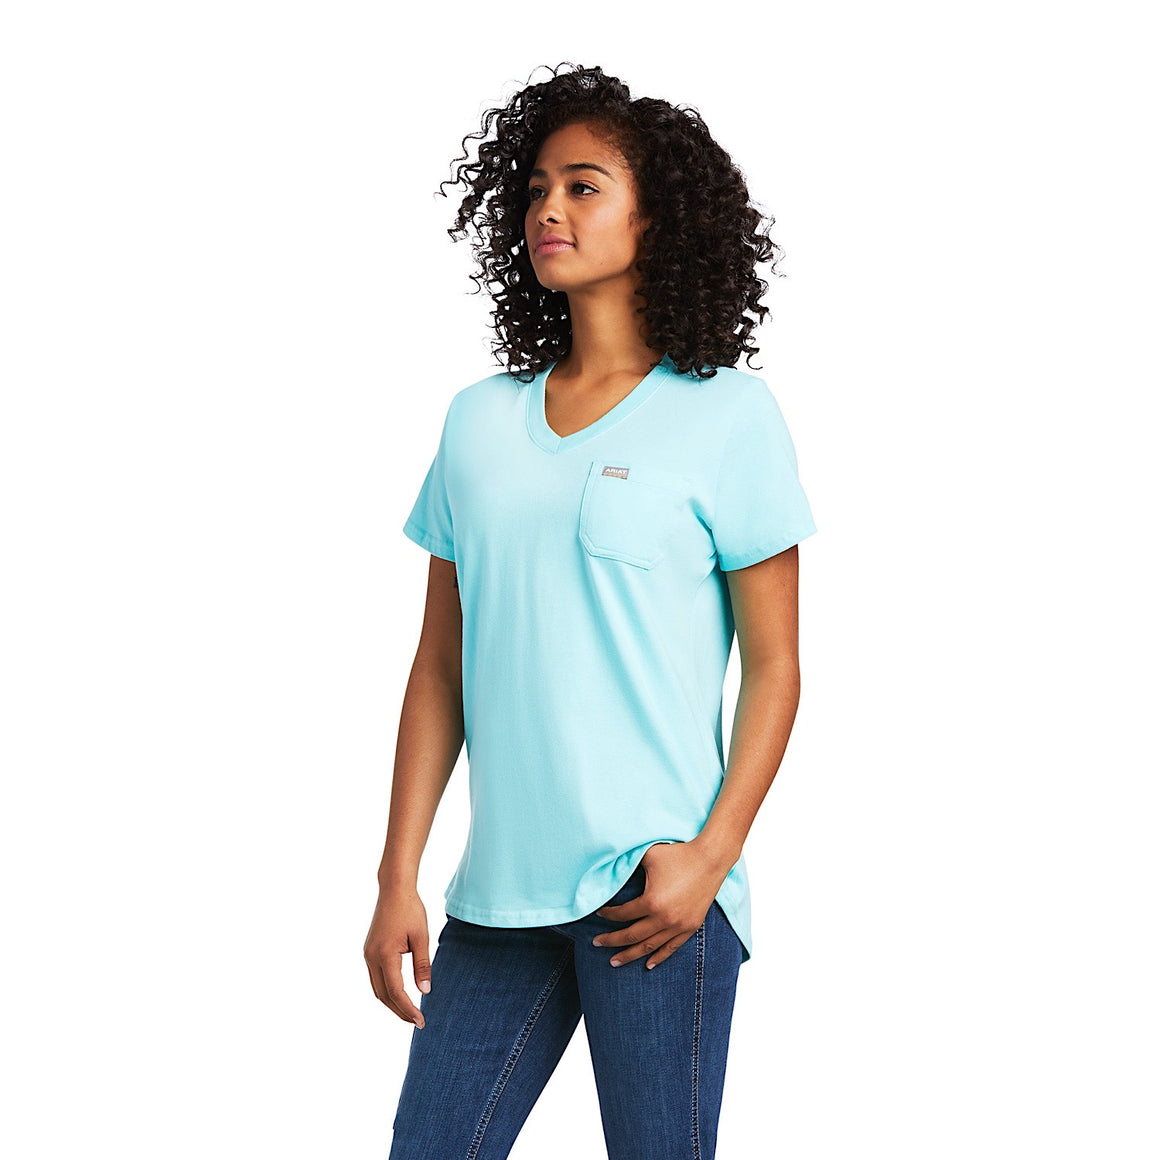 Ariat Womens Rebar Cotton Strong Wrench Graphic T-Shirt Aqua Sky